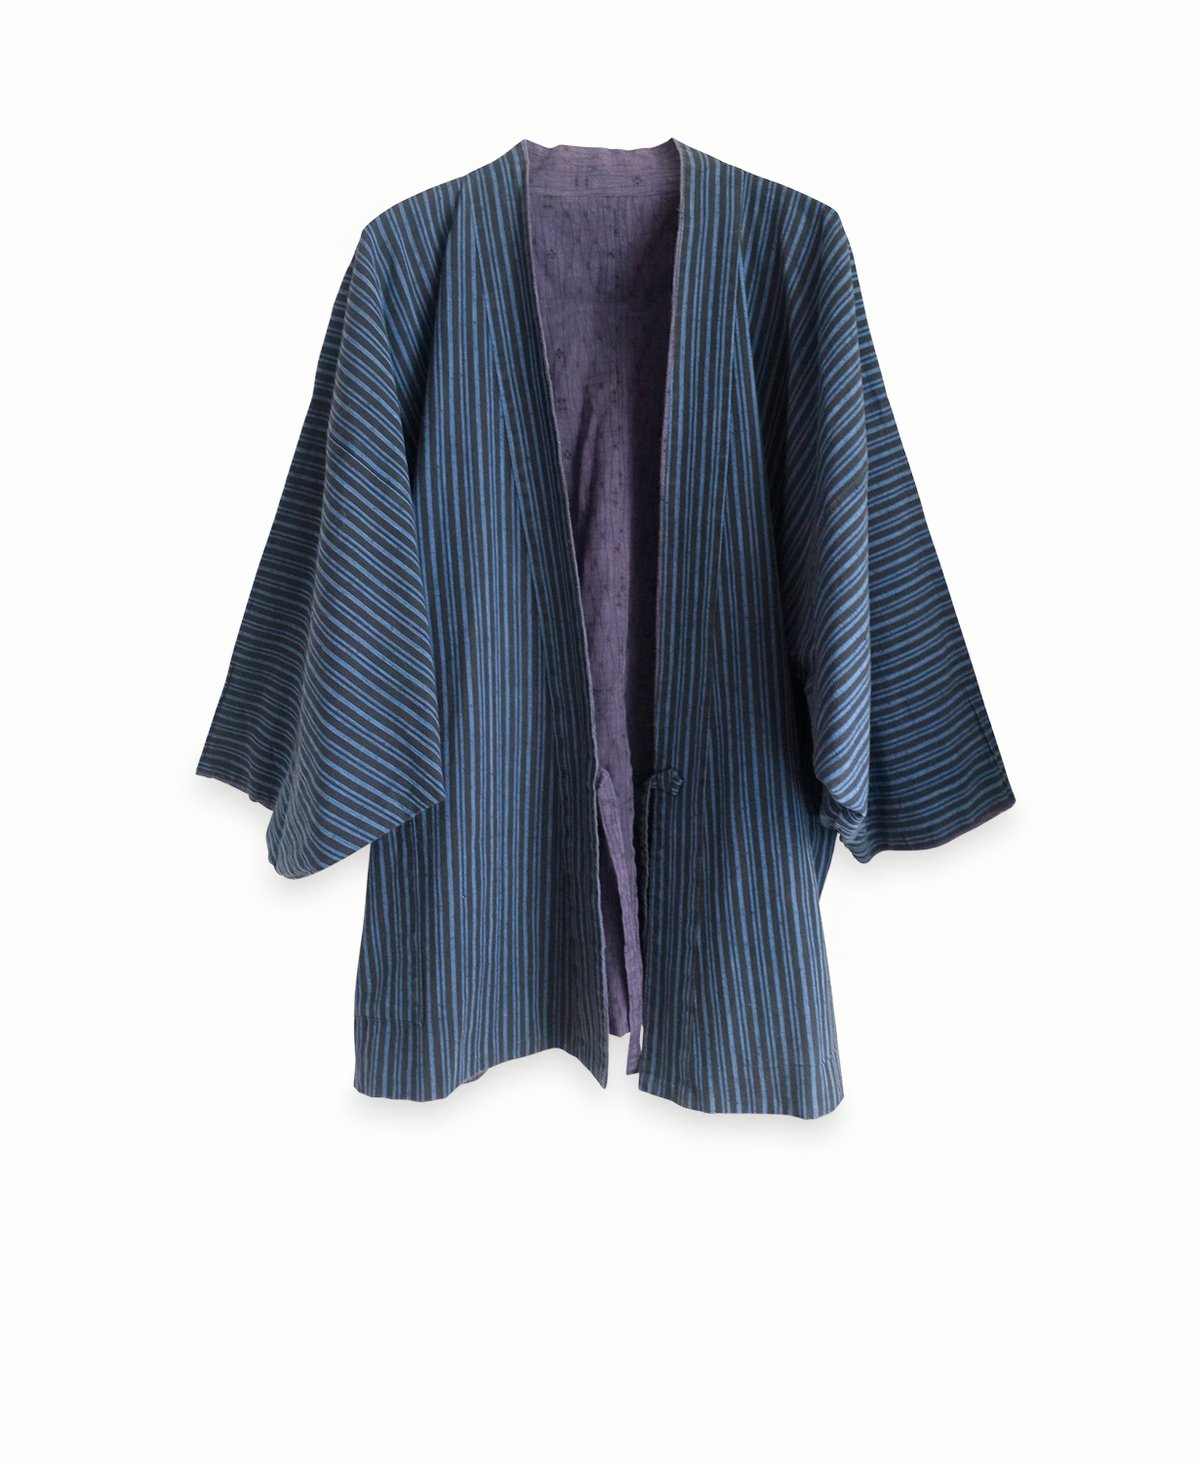 øre Udveksle kalv Kort kimono jakke - blå med striber - vendbar | Kimono in the Clouds